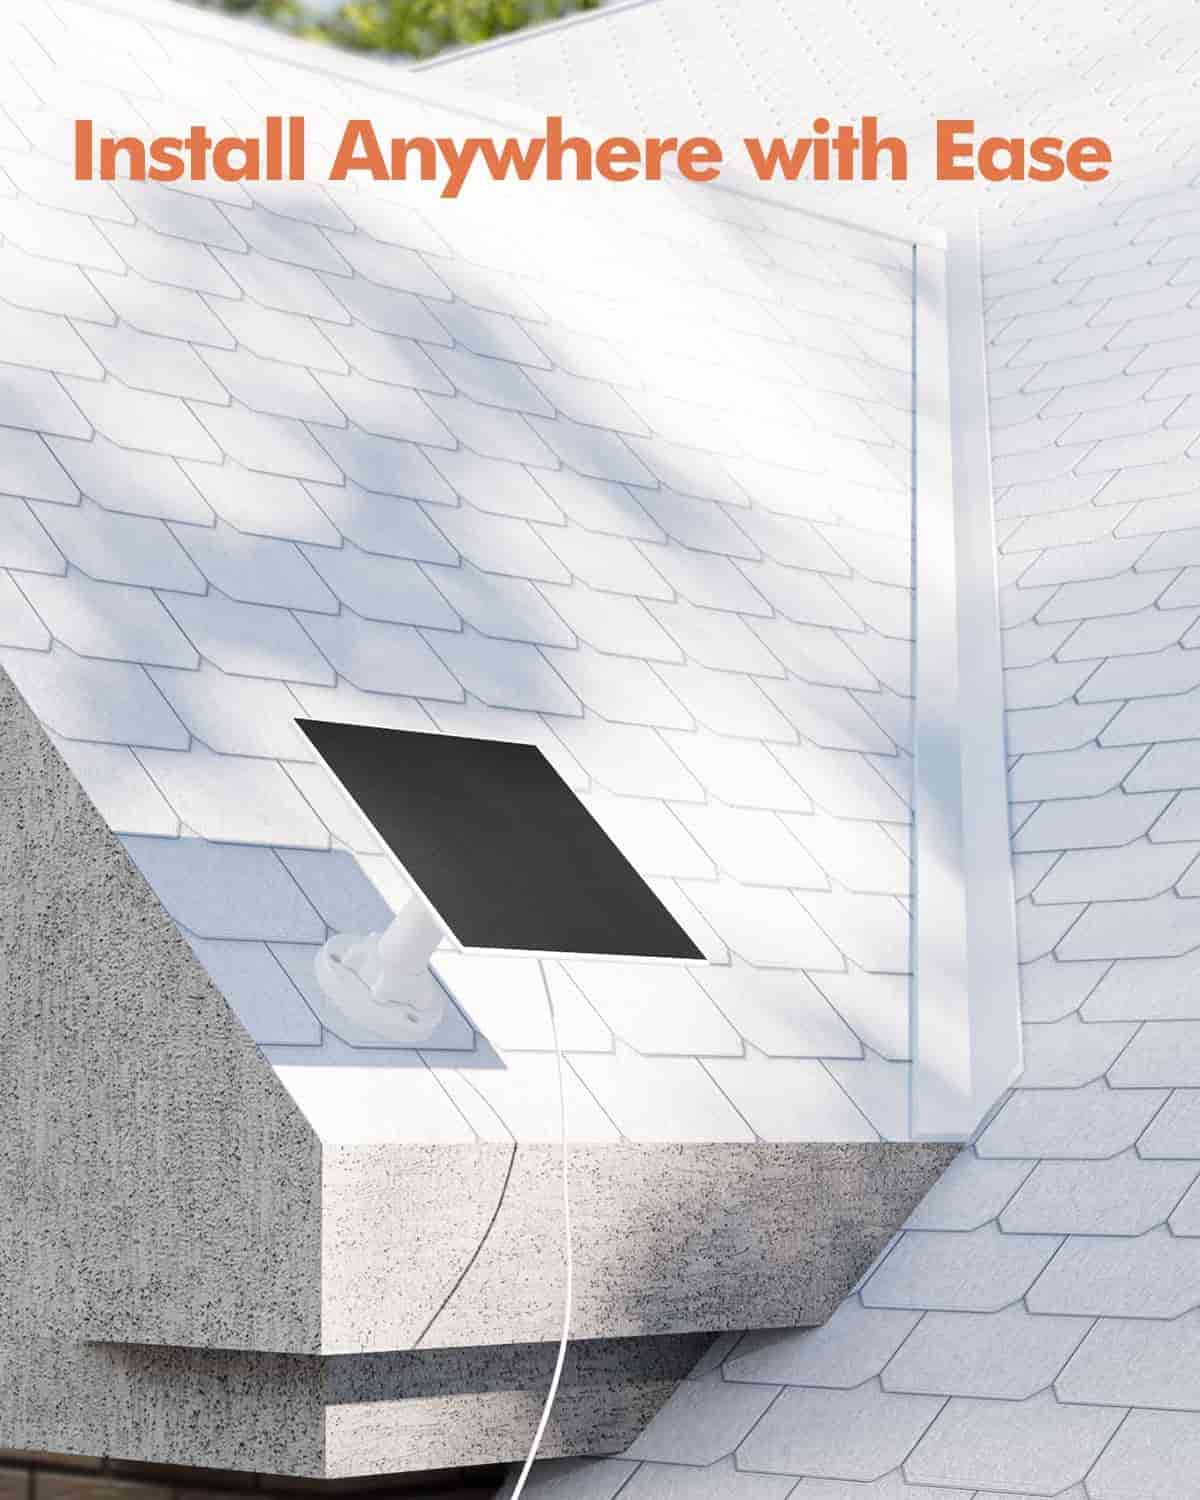 Dzees-solar-panel-install-anywhere